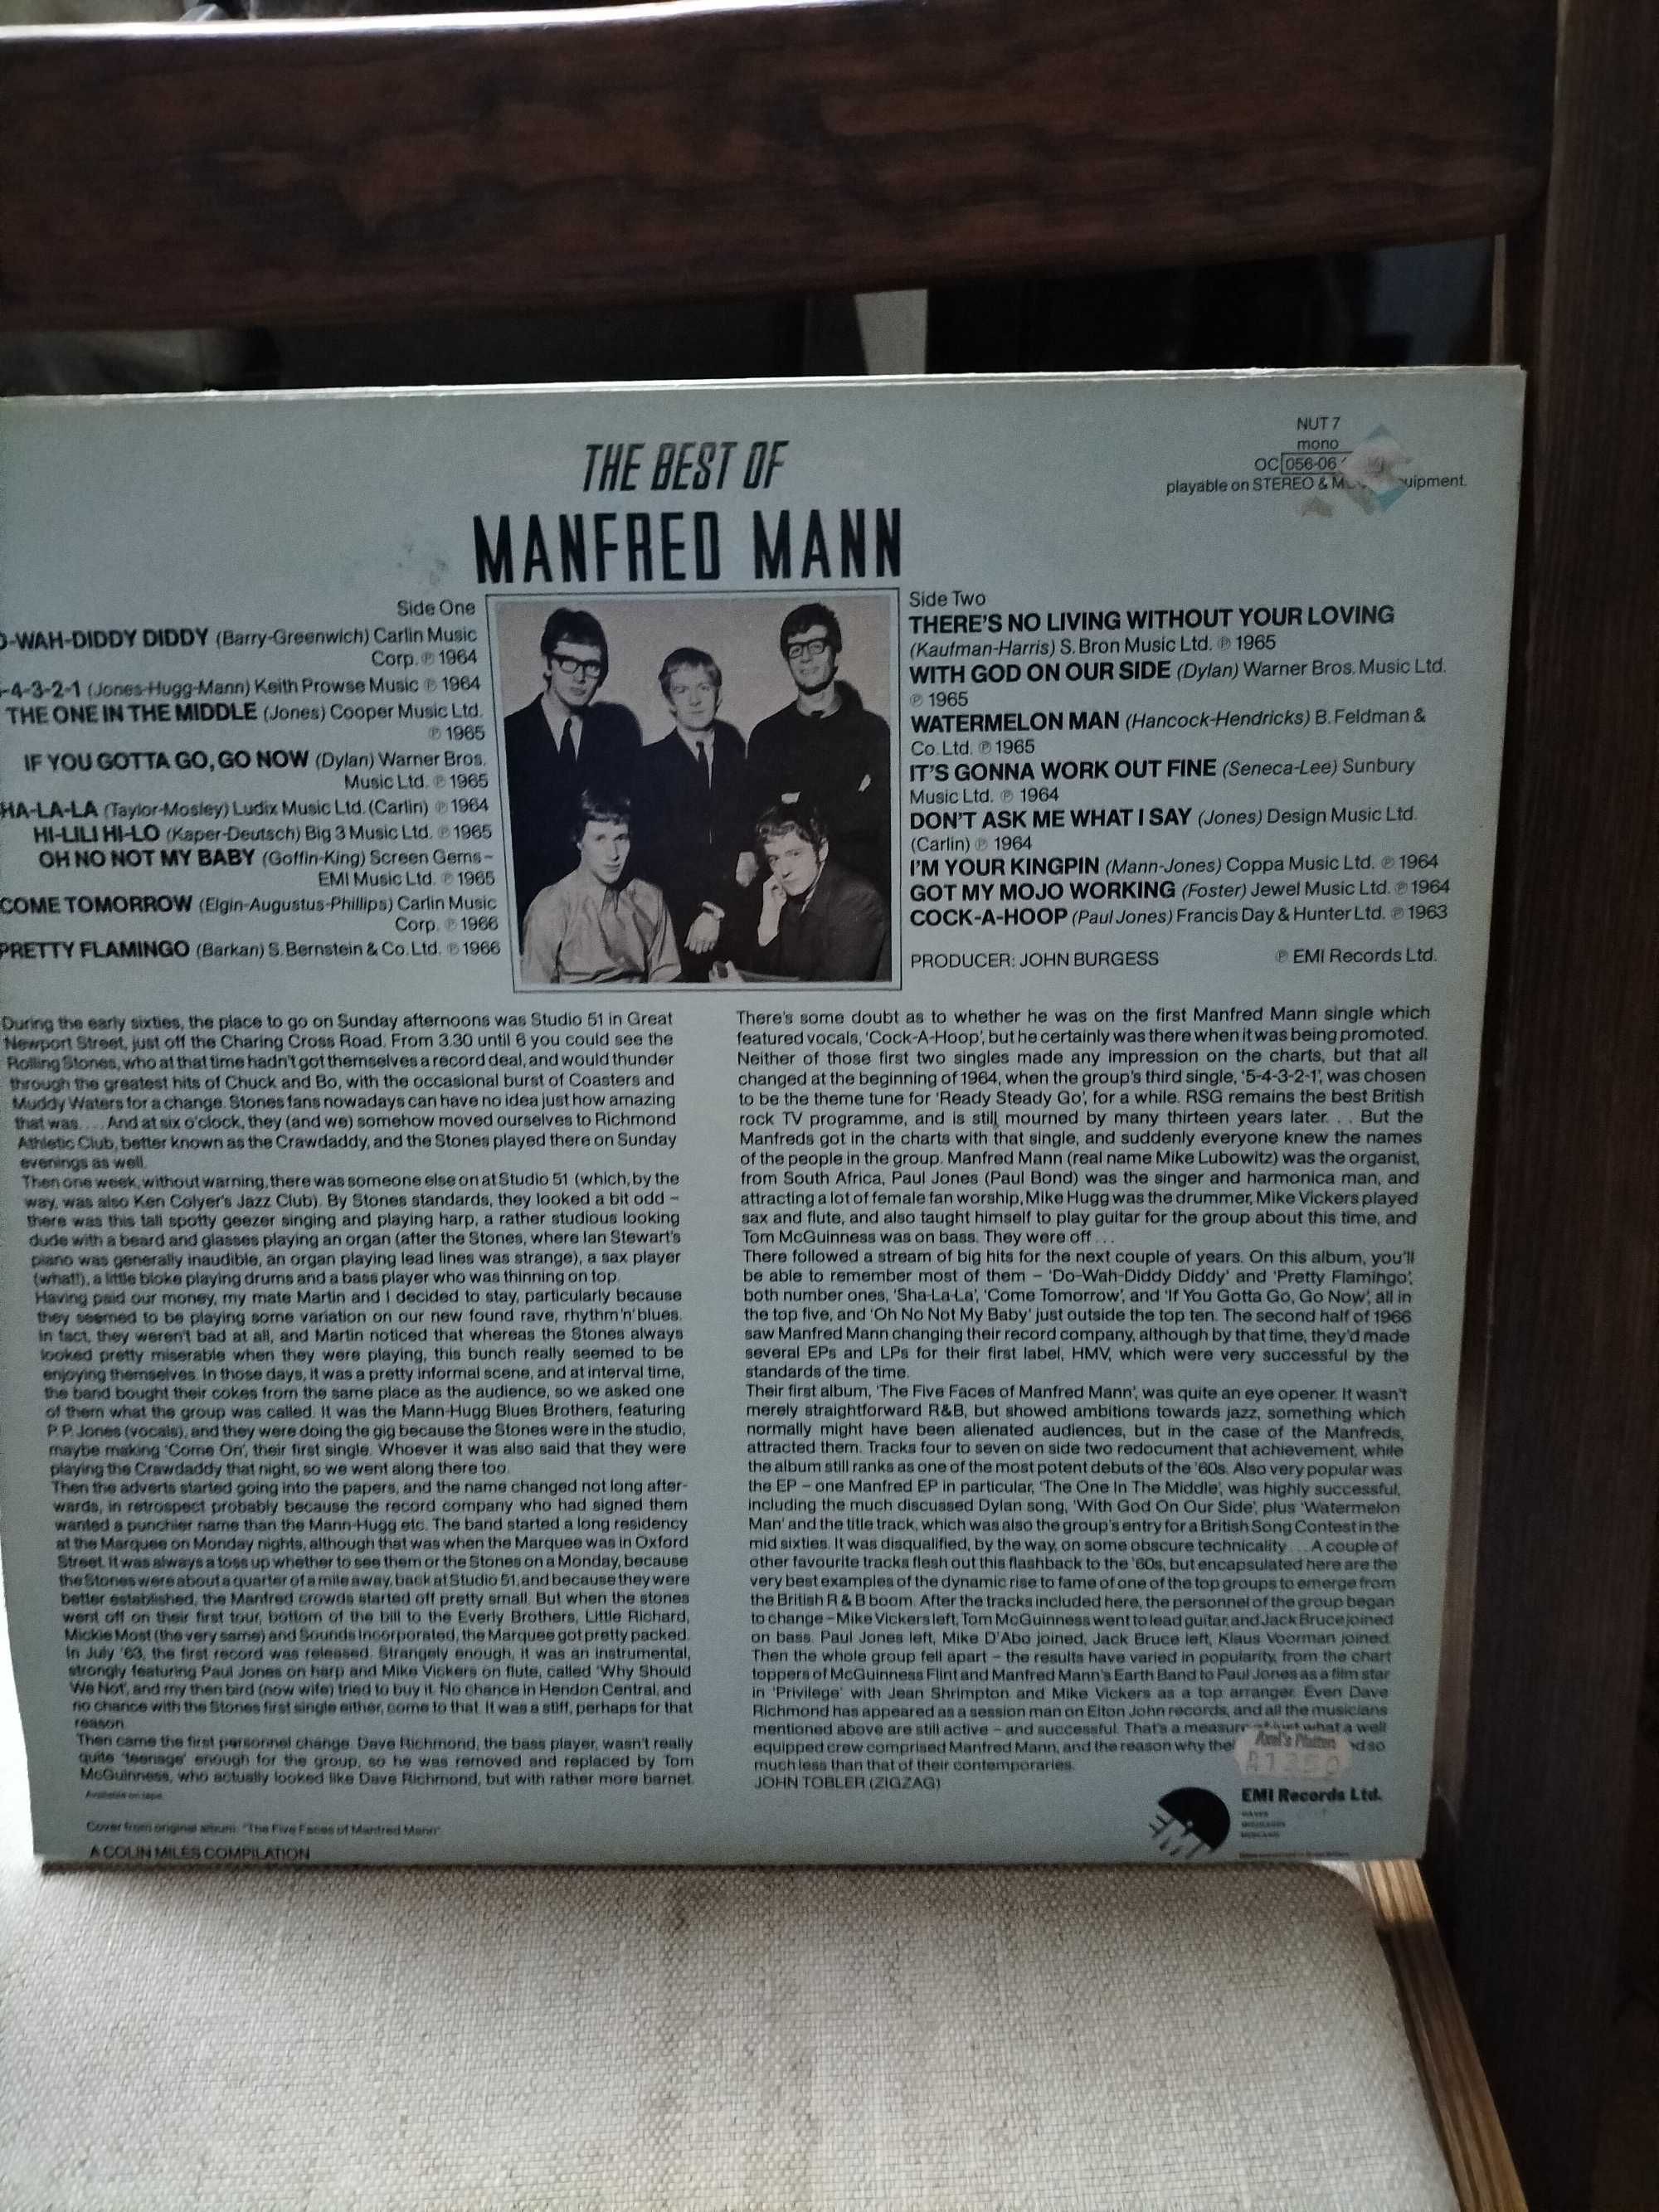 Winyl Manfred Mann  " The Best Of " mint